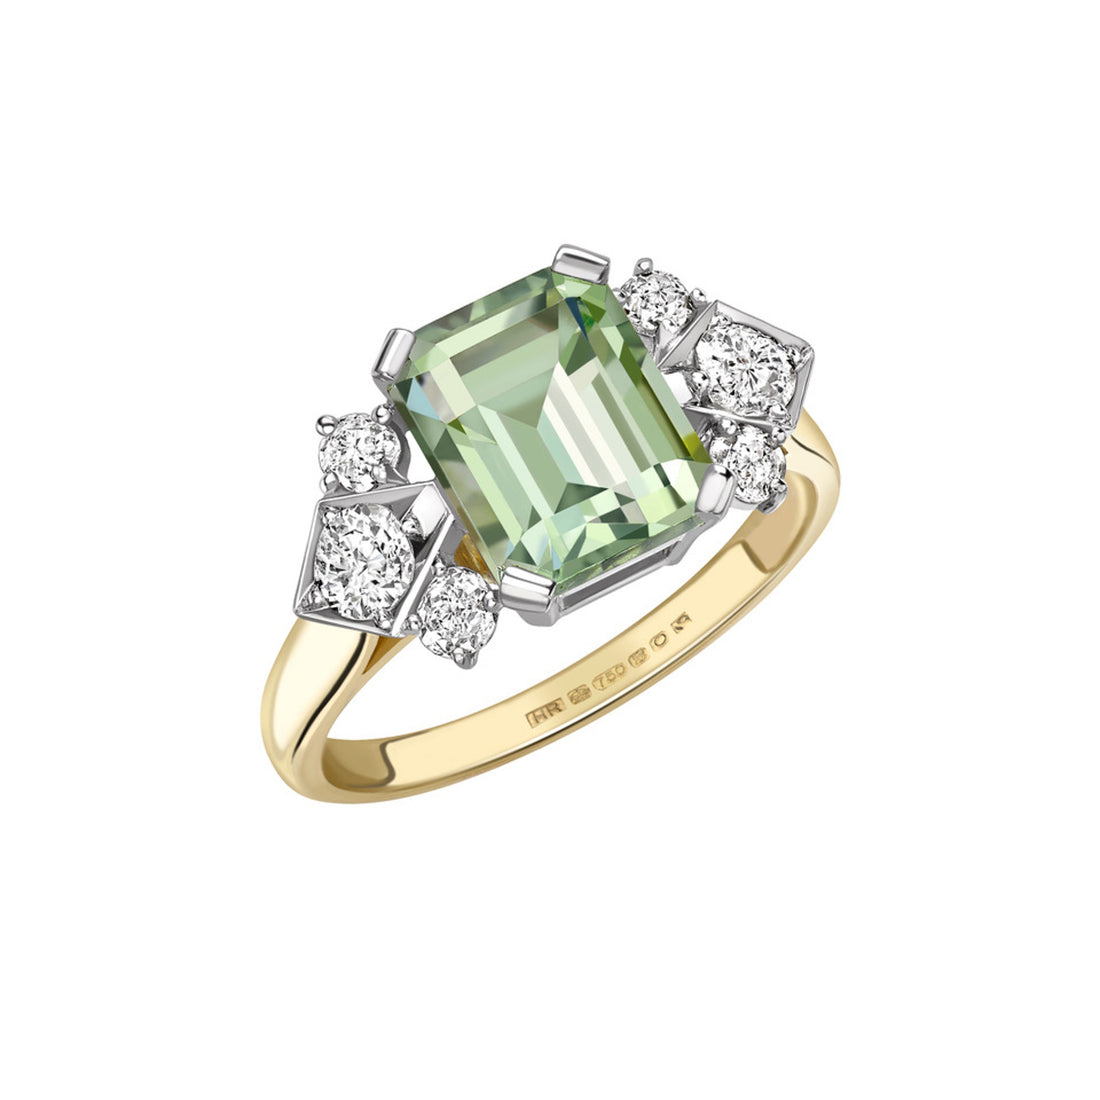  Green Amethyst & Diamond Ring by Hattie Rickards | The Cut London